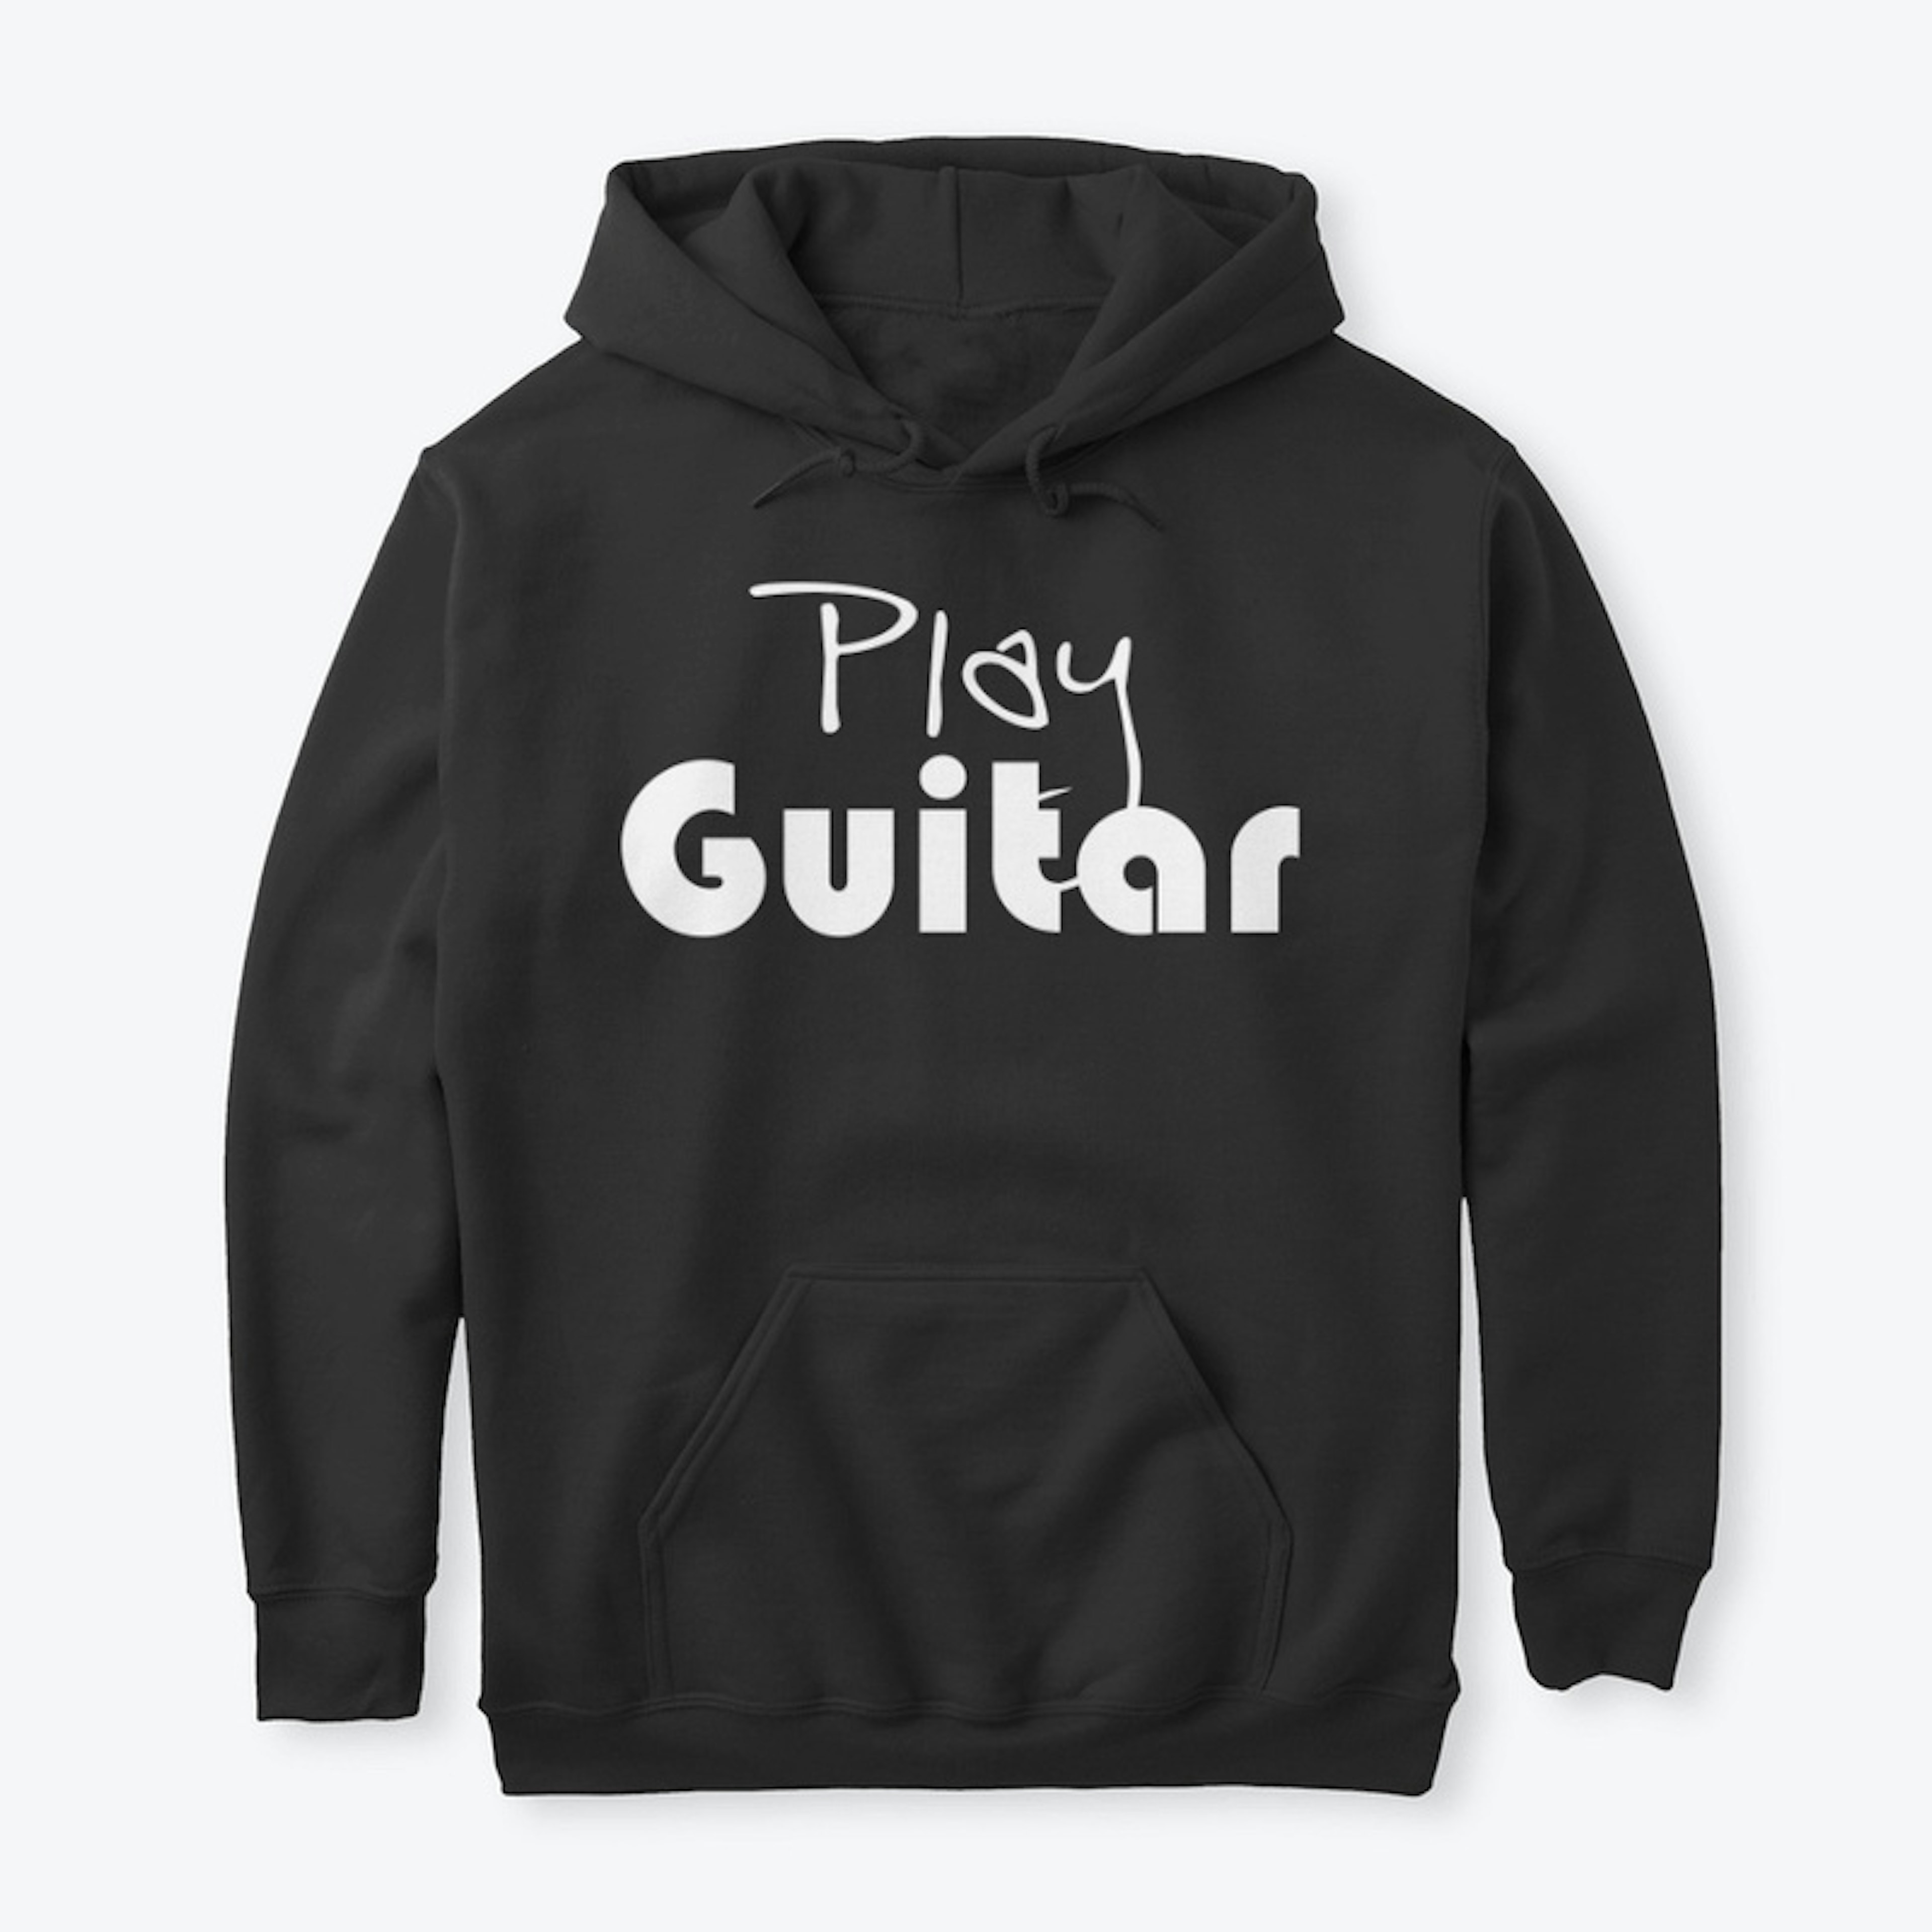 Play Guitar design